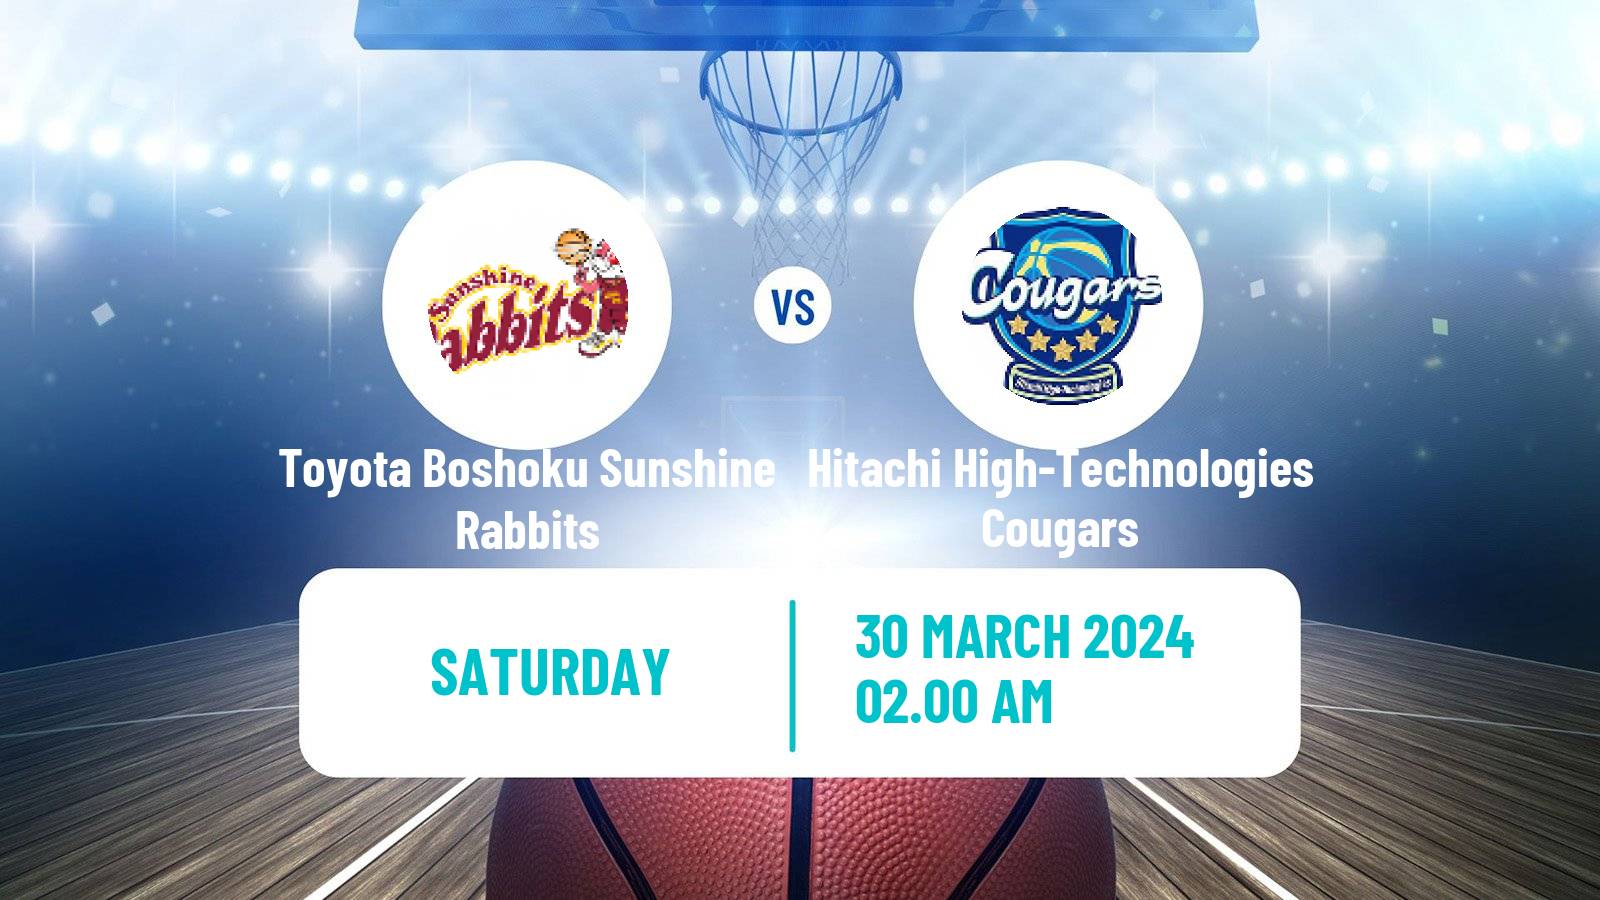 Basketball Japan W League Basketball Toyota Boshoku Sunshine Rabbits - Hitachi High-Technologies Cougars